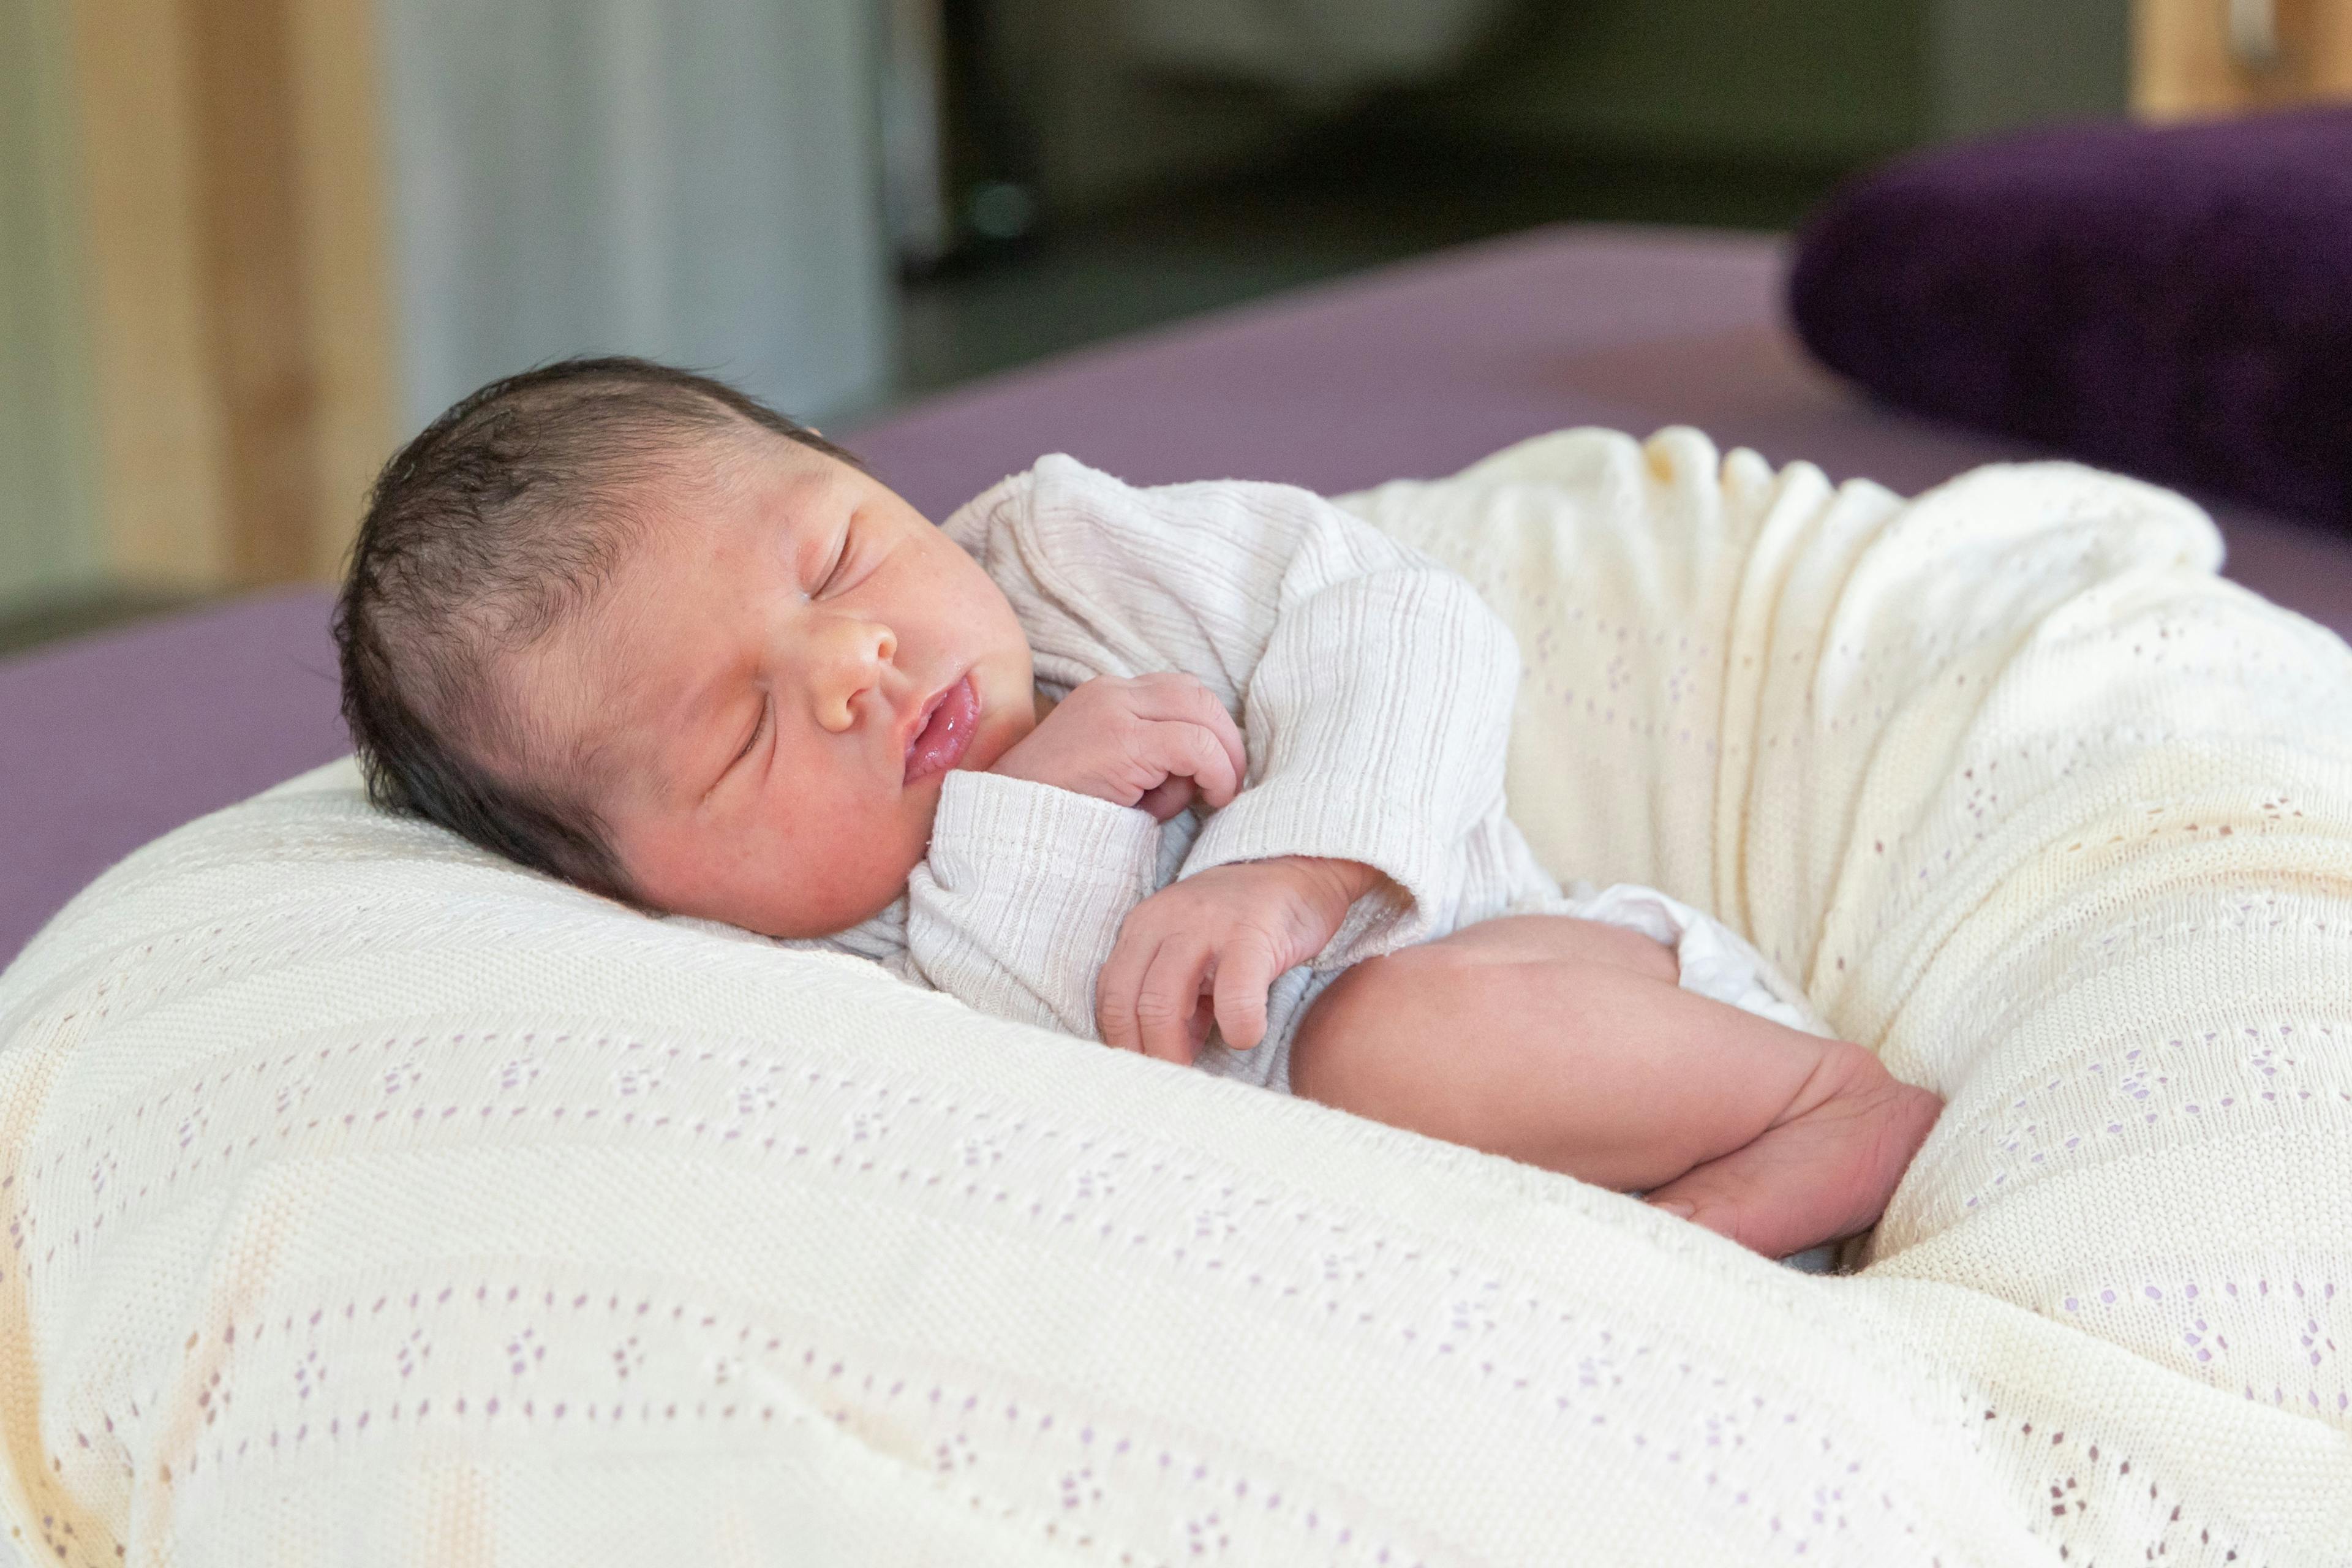 Sleeping newborn baby on a white blanket.